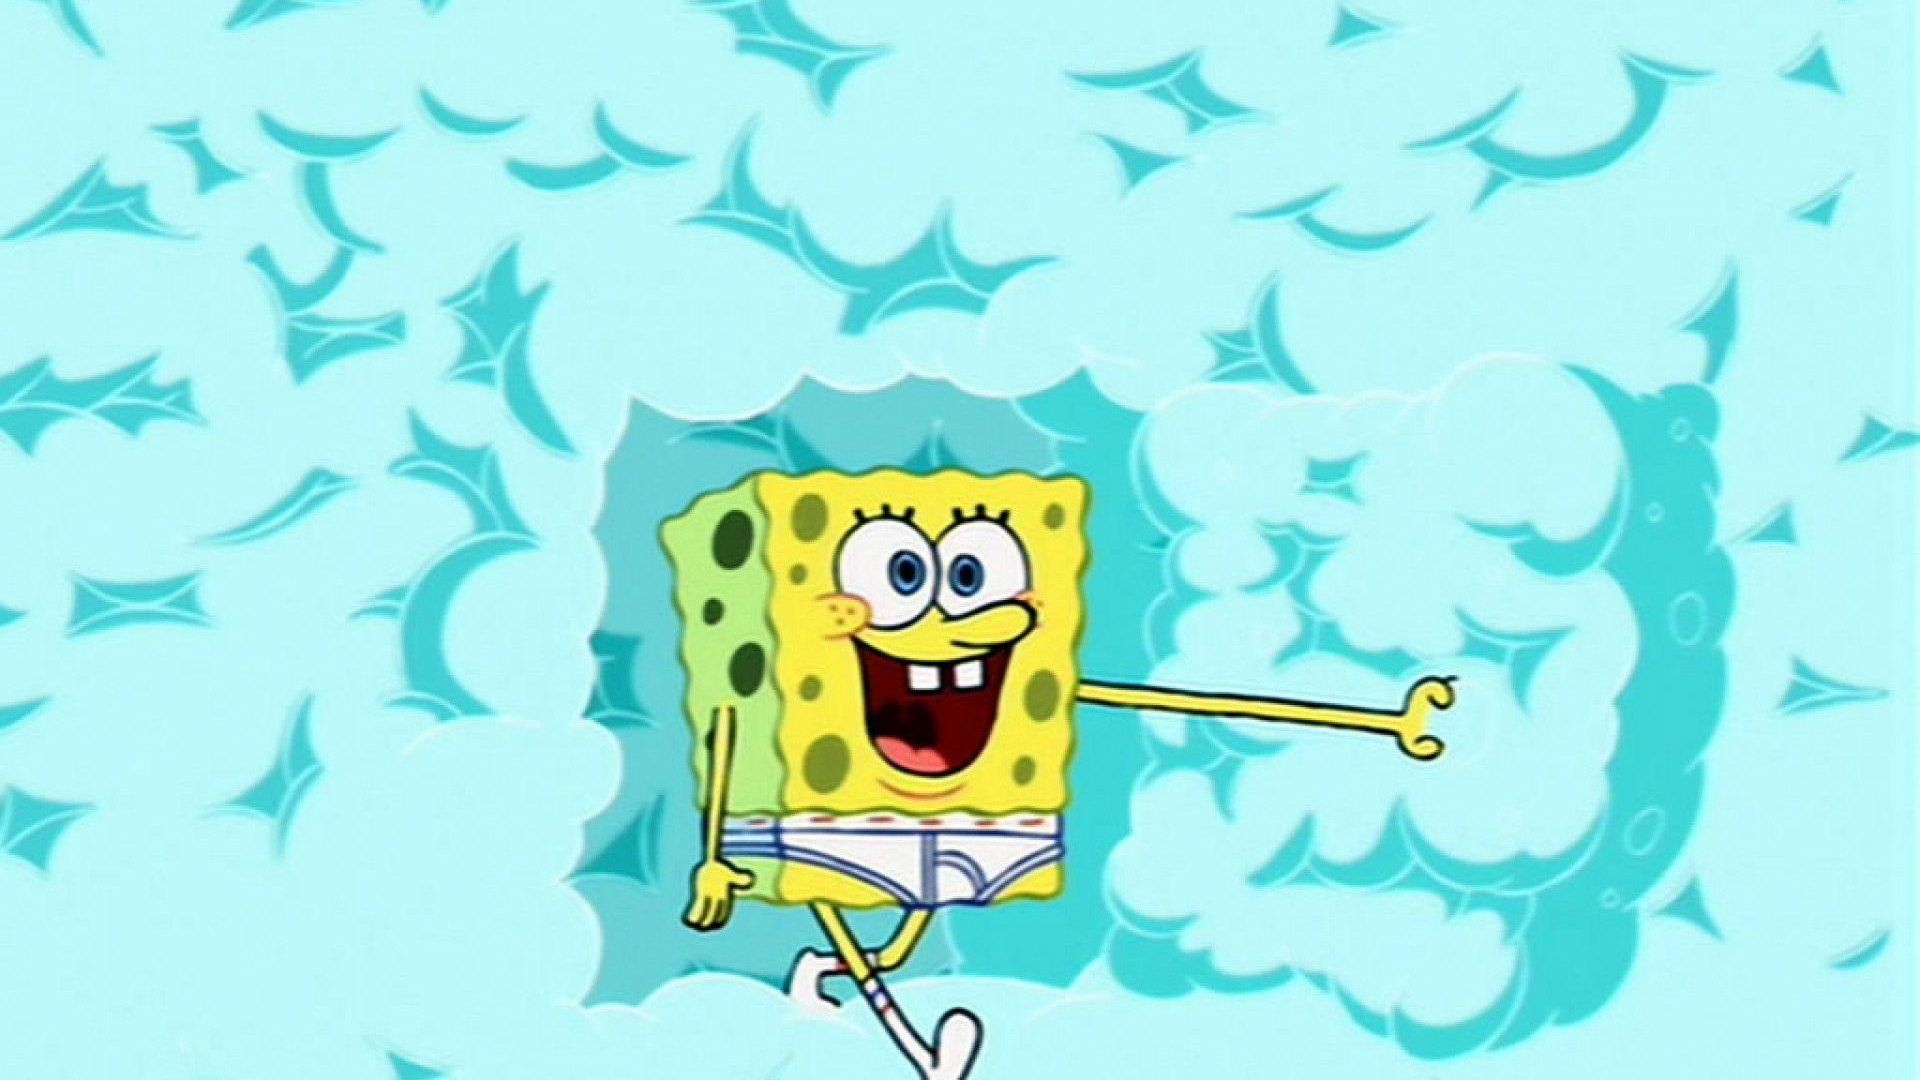 Spongebob squarepants in his underwear - SpongeBob